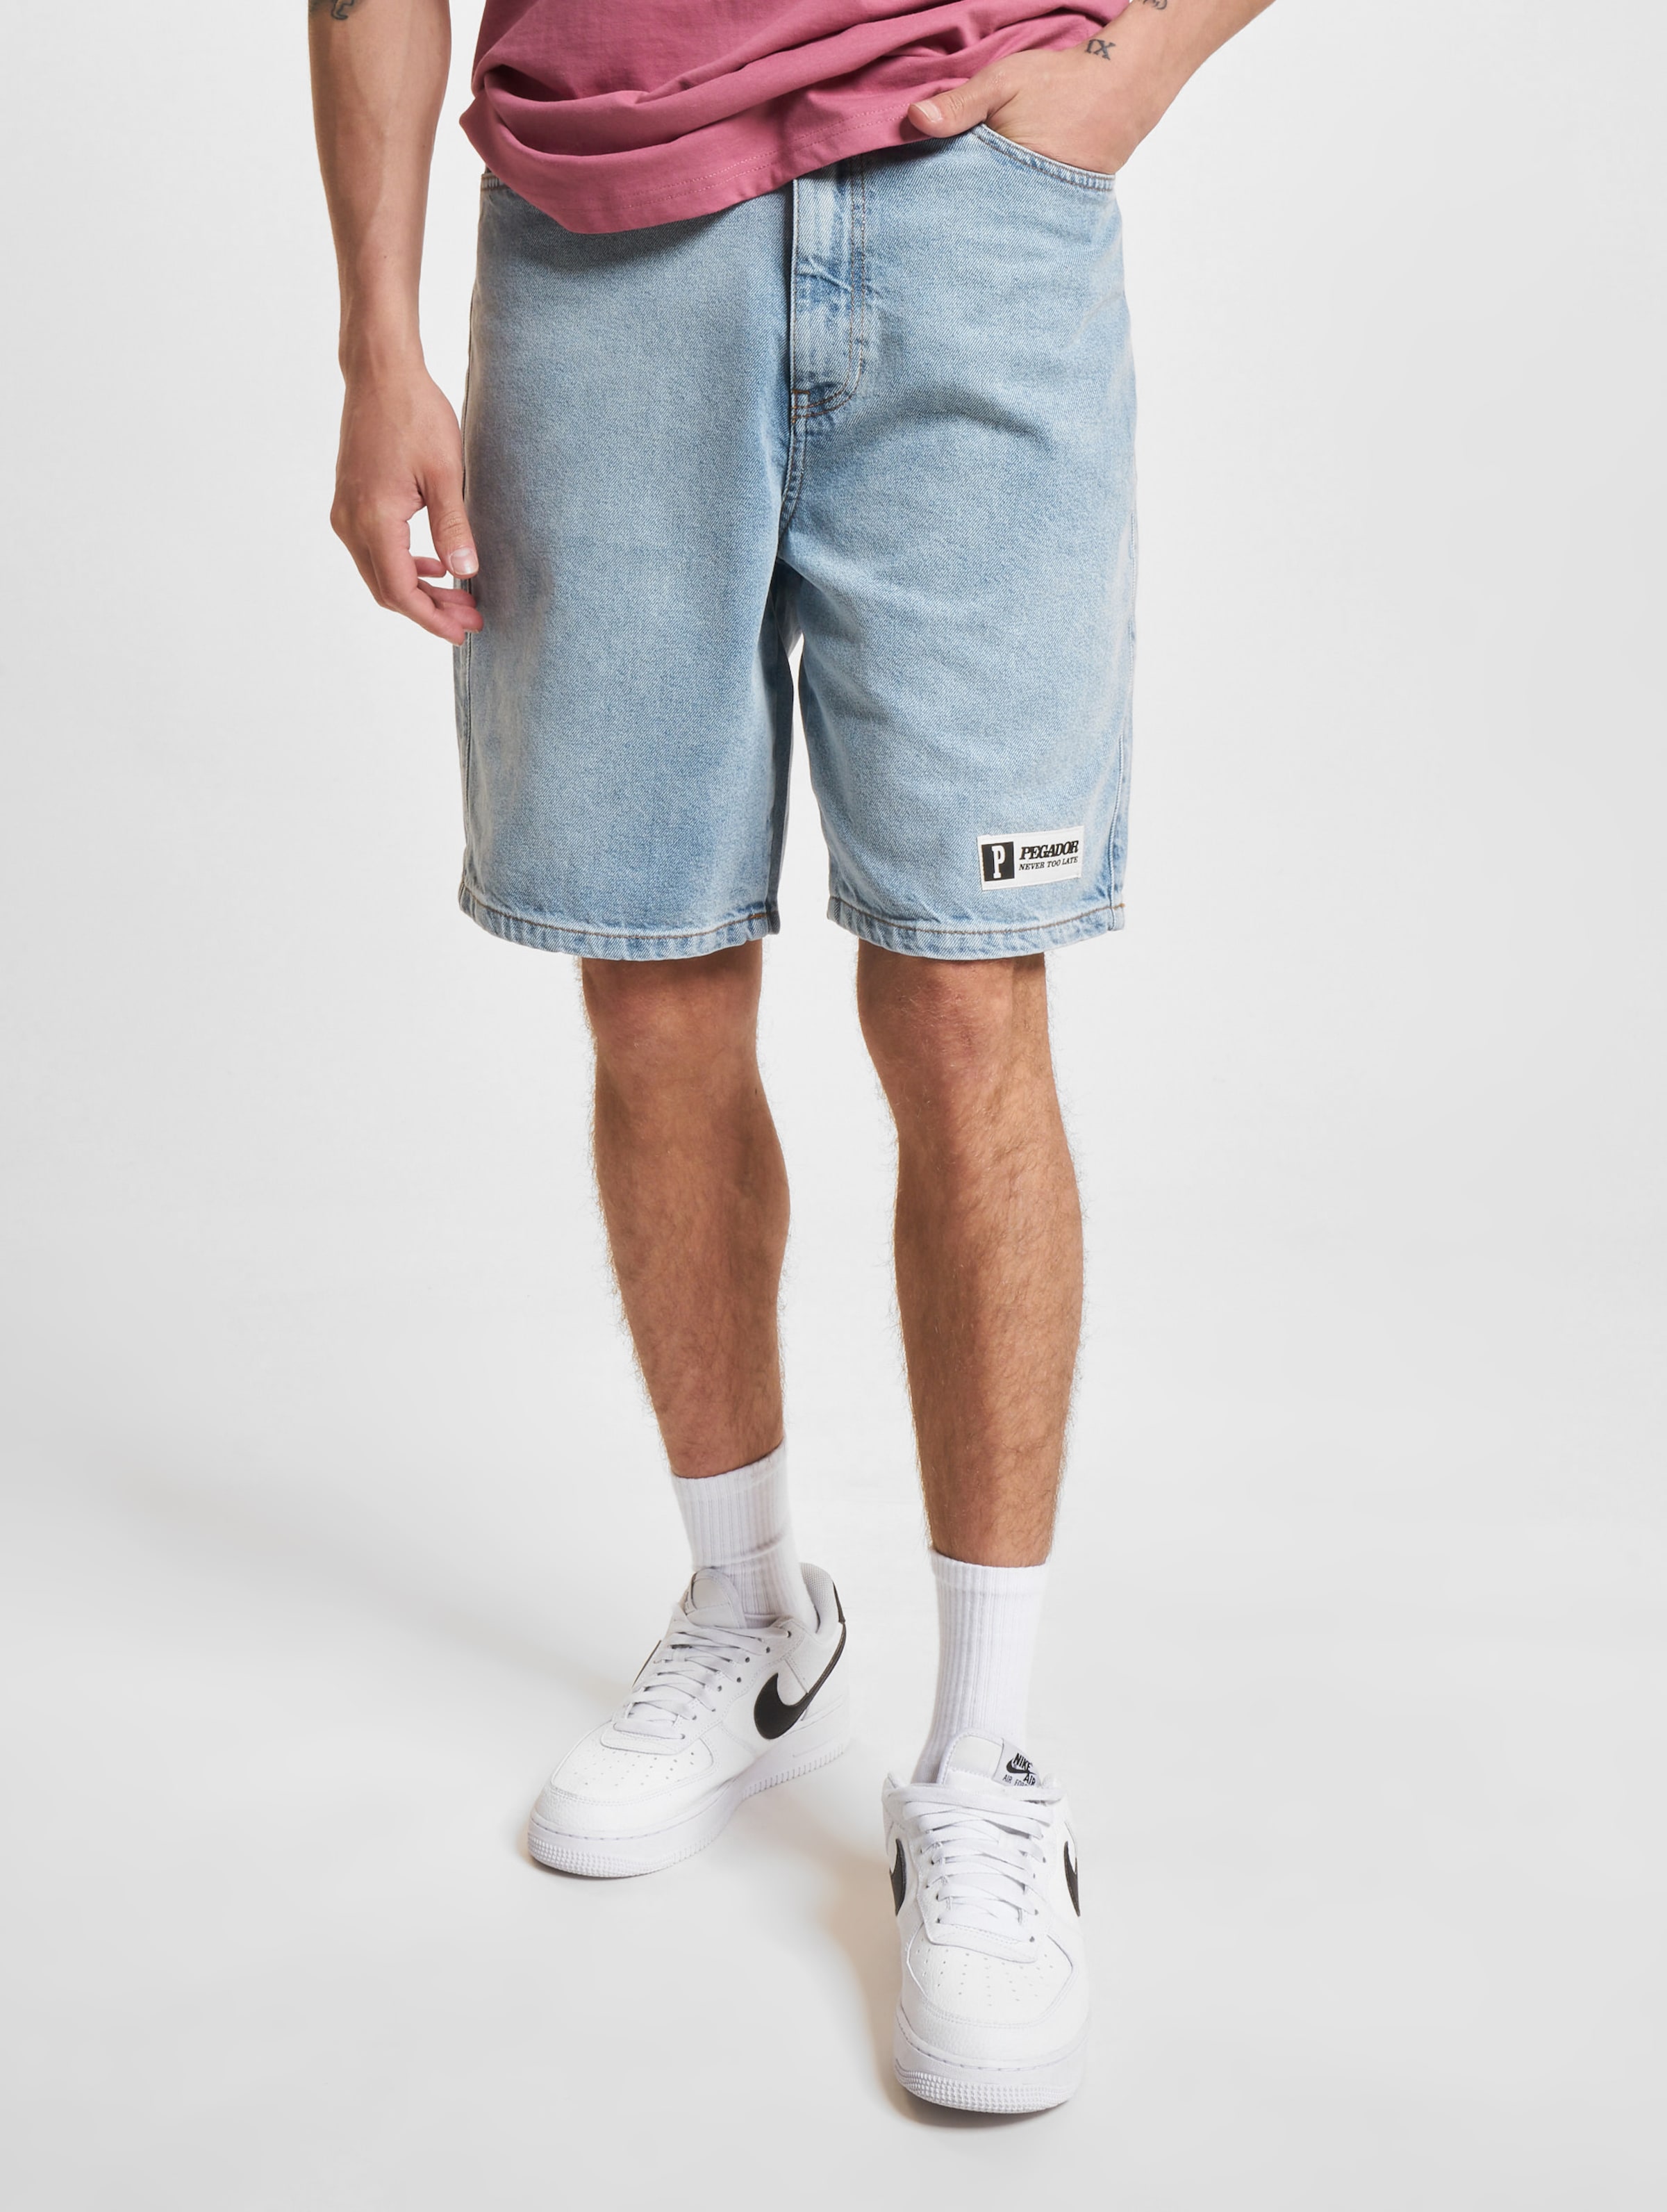 PEGADOR Moores Jeans Shorts Männer,Unisex op kleur blauw, Maat 31